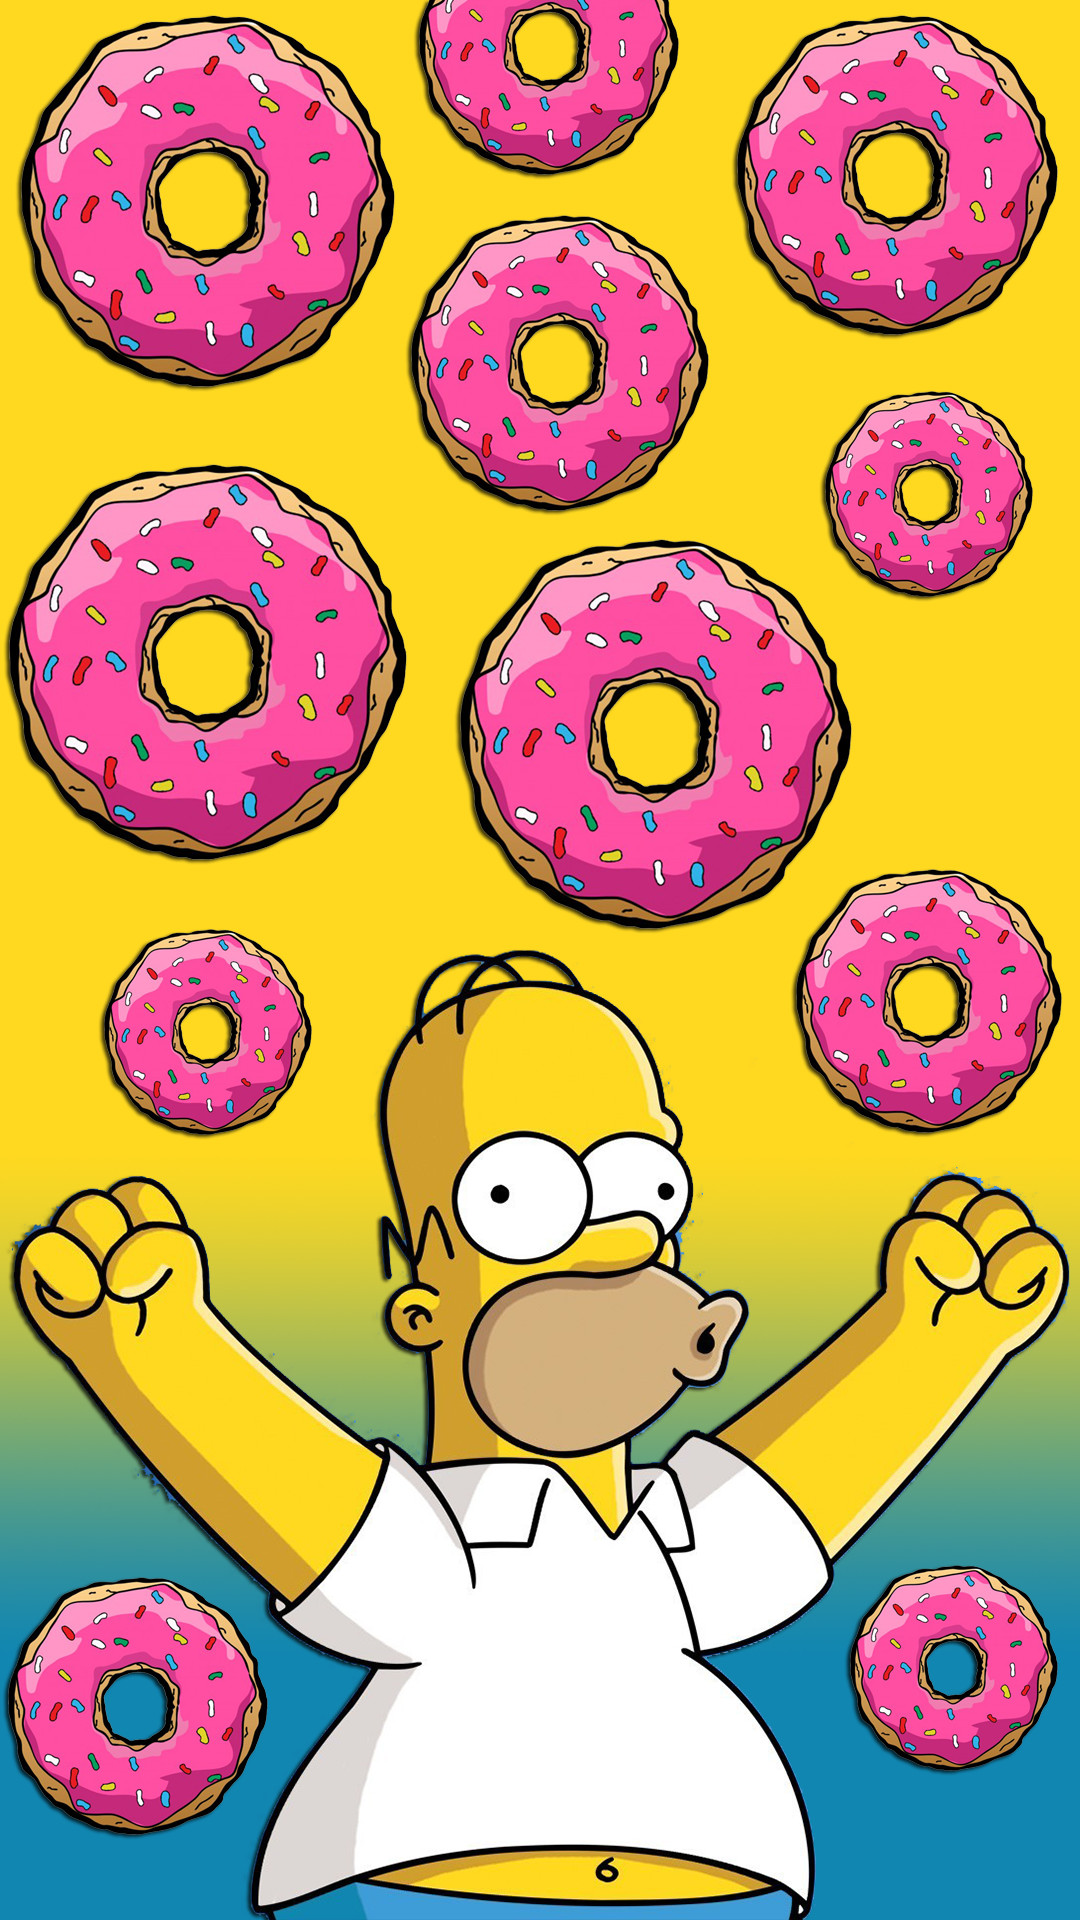 1080x1920 Homer Simpson Donuts 1080 x 1920 FHD Wallpaper Homer Simpson Donuts 1080 x  1920 FHD Wallpaper